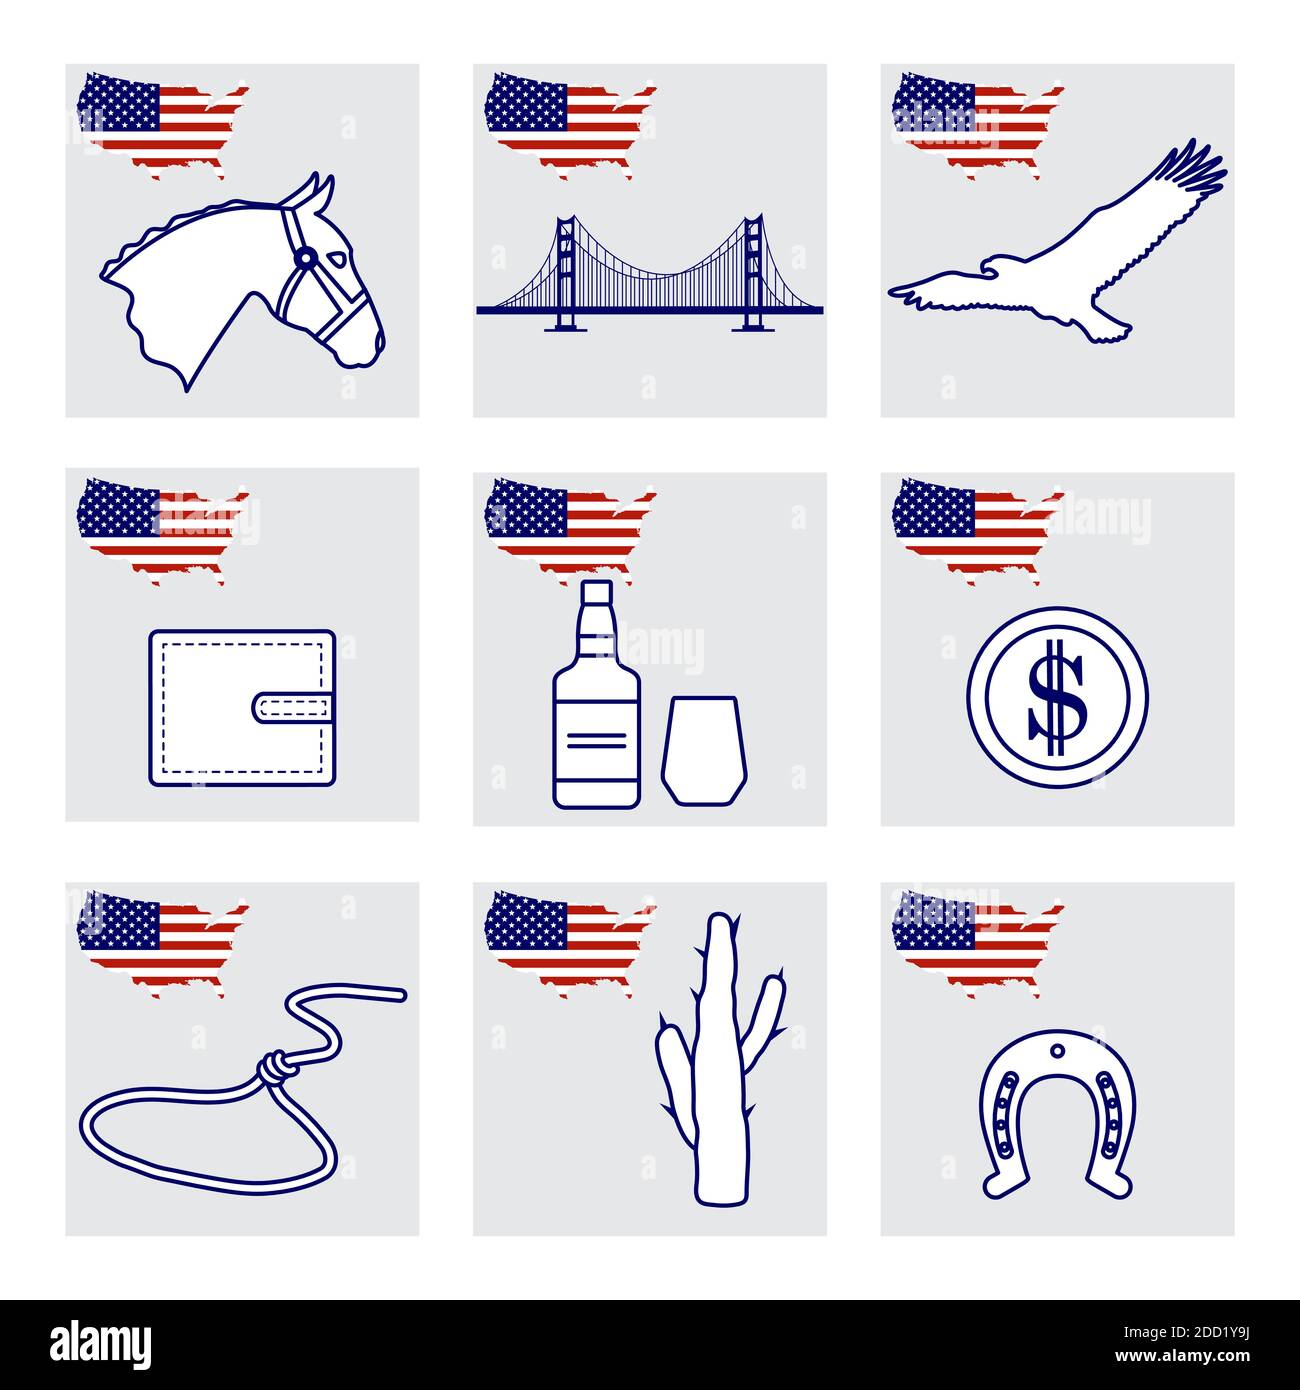 us national symbols